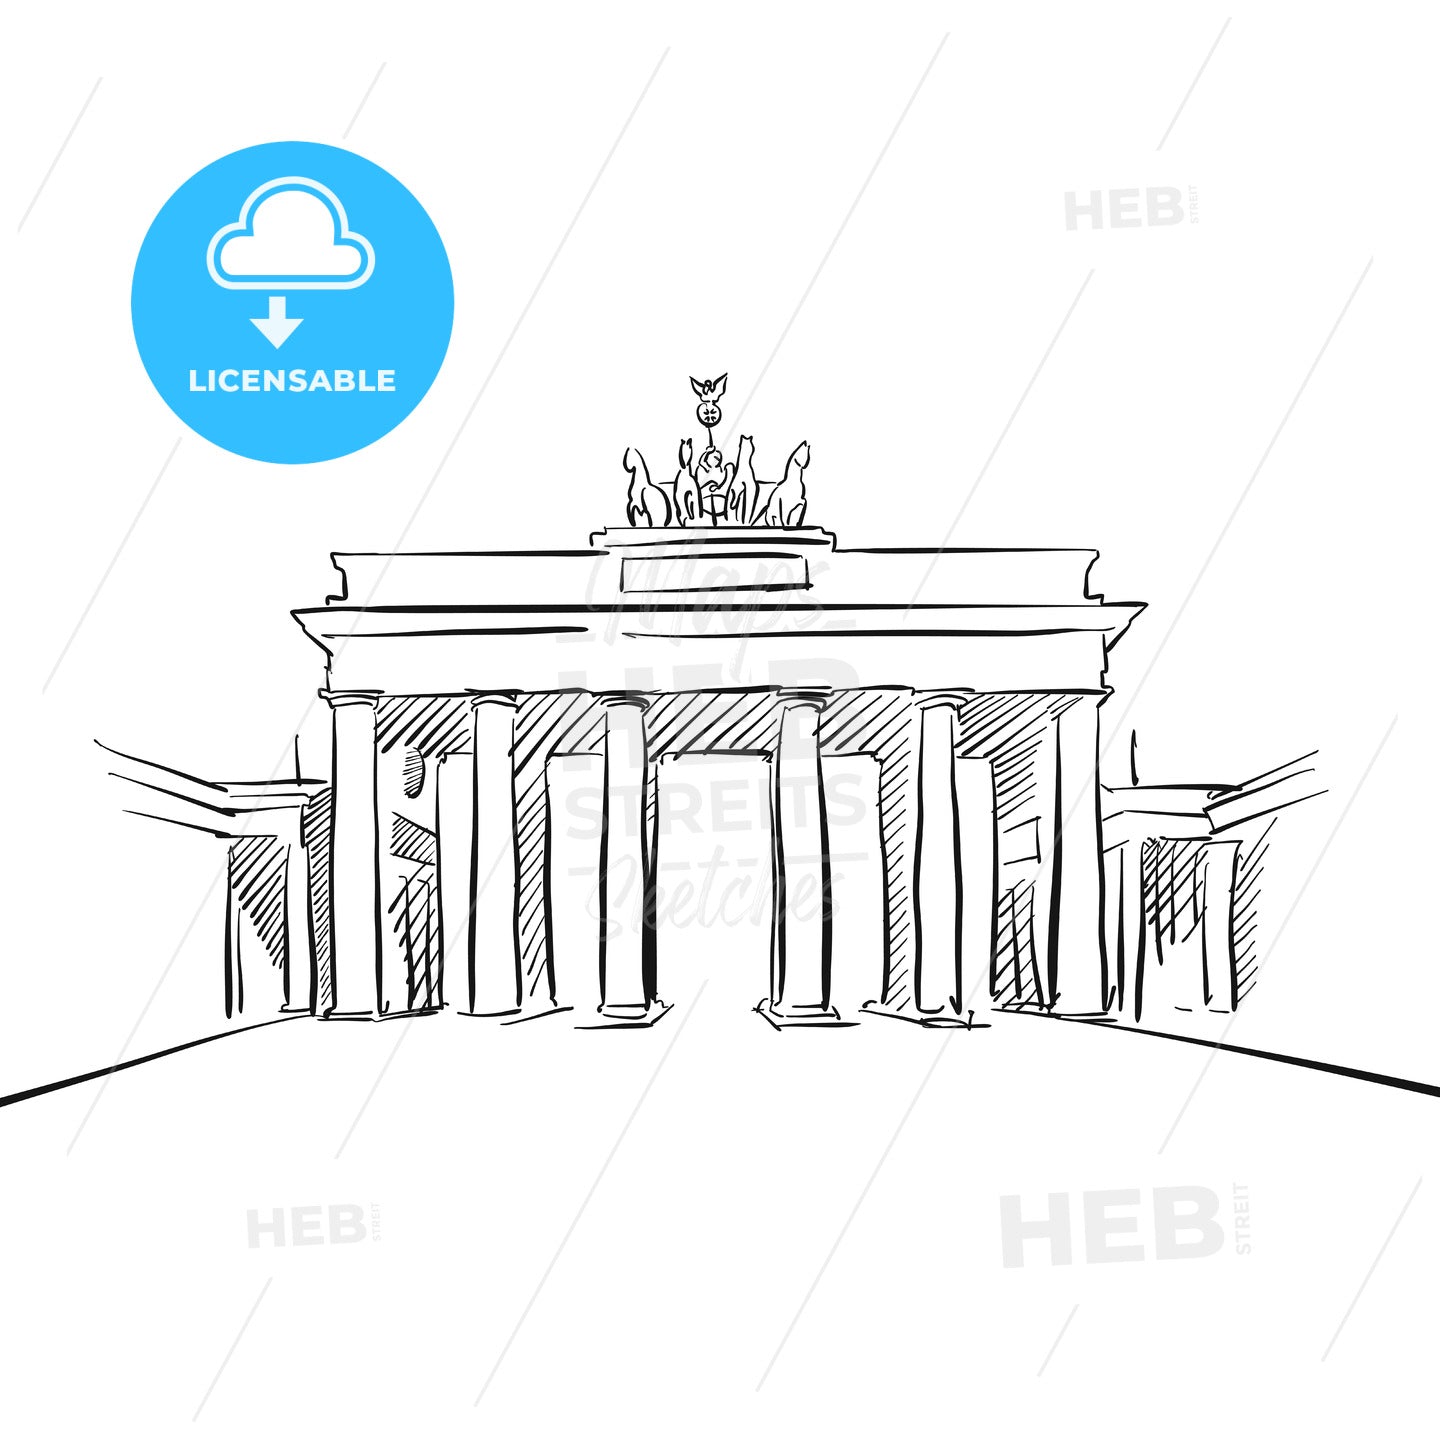 Brandeburg Gate in Berlin – instant download